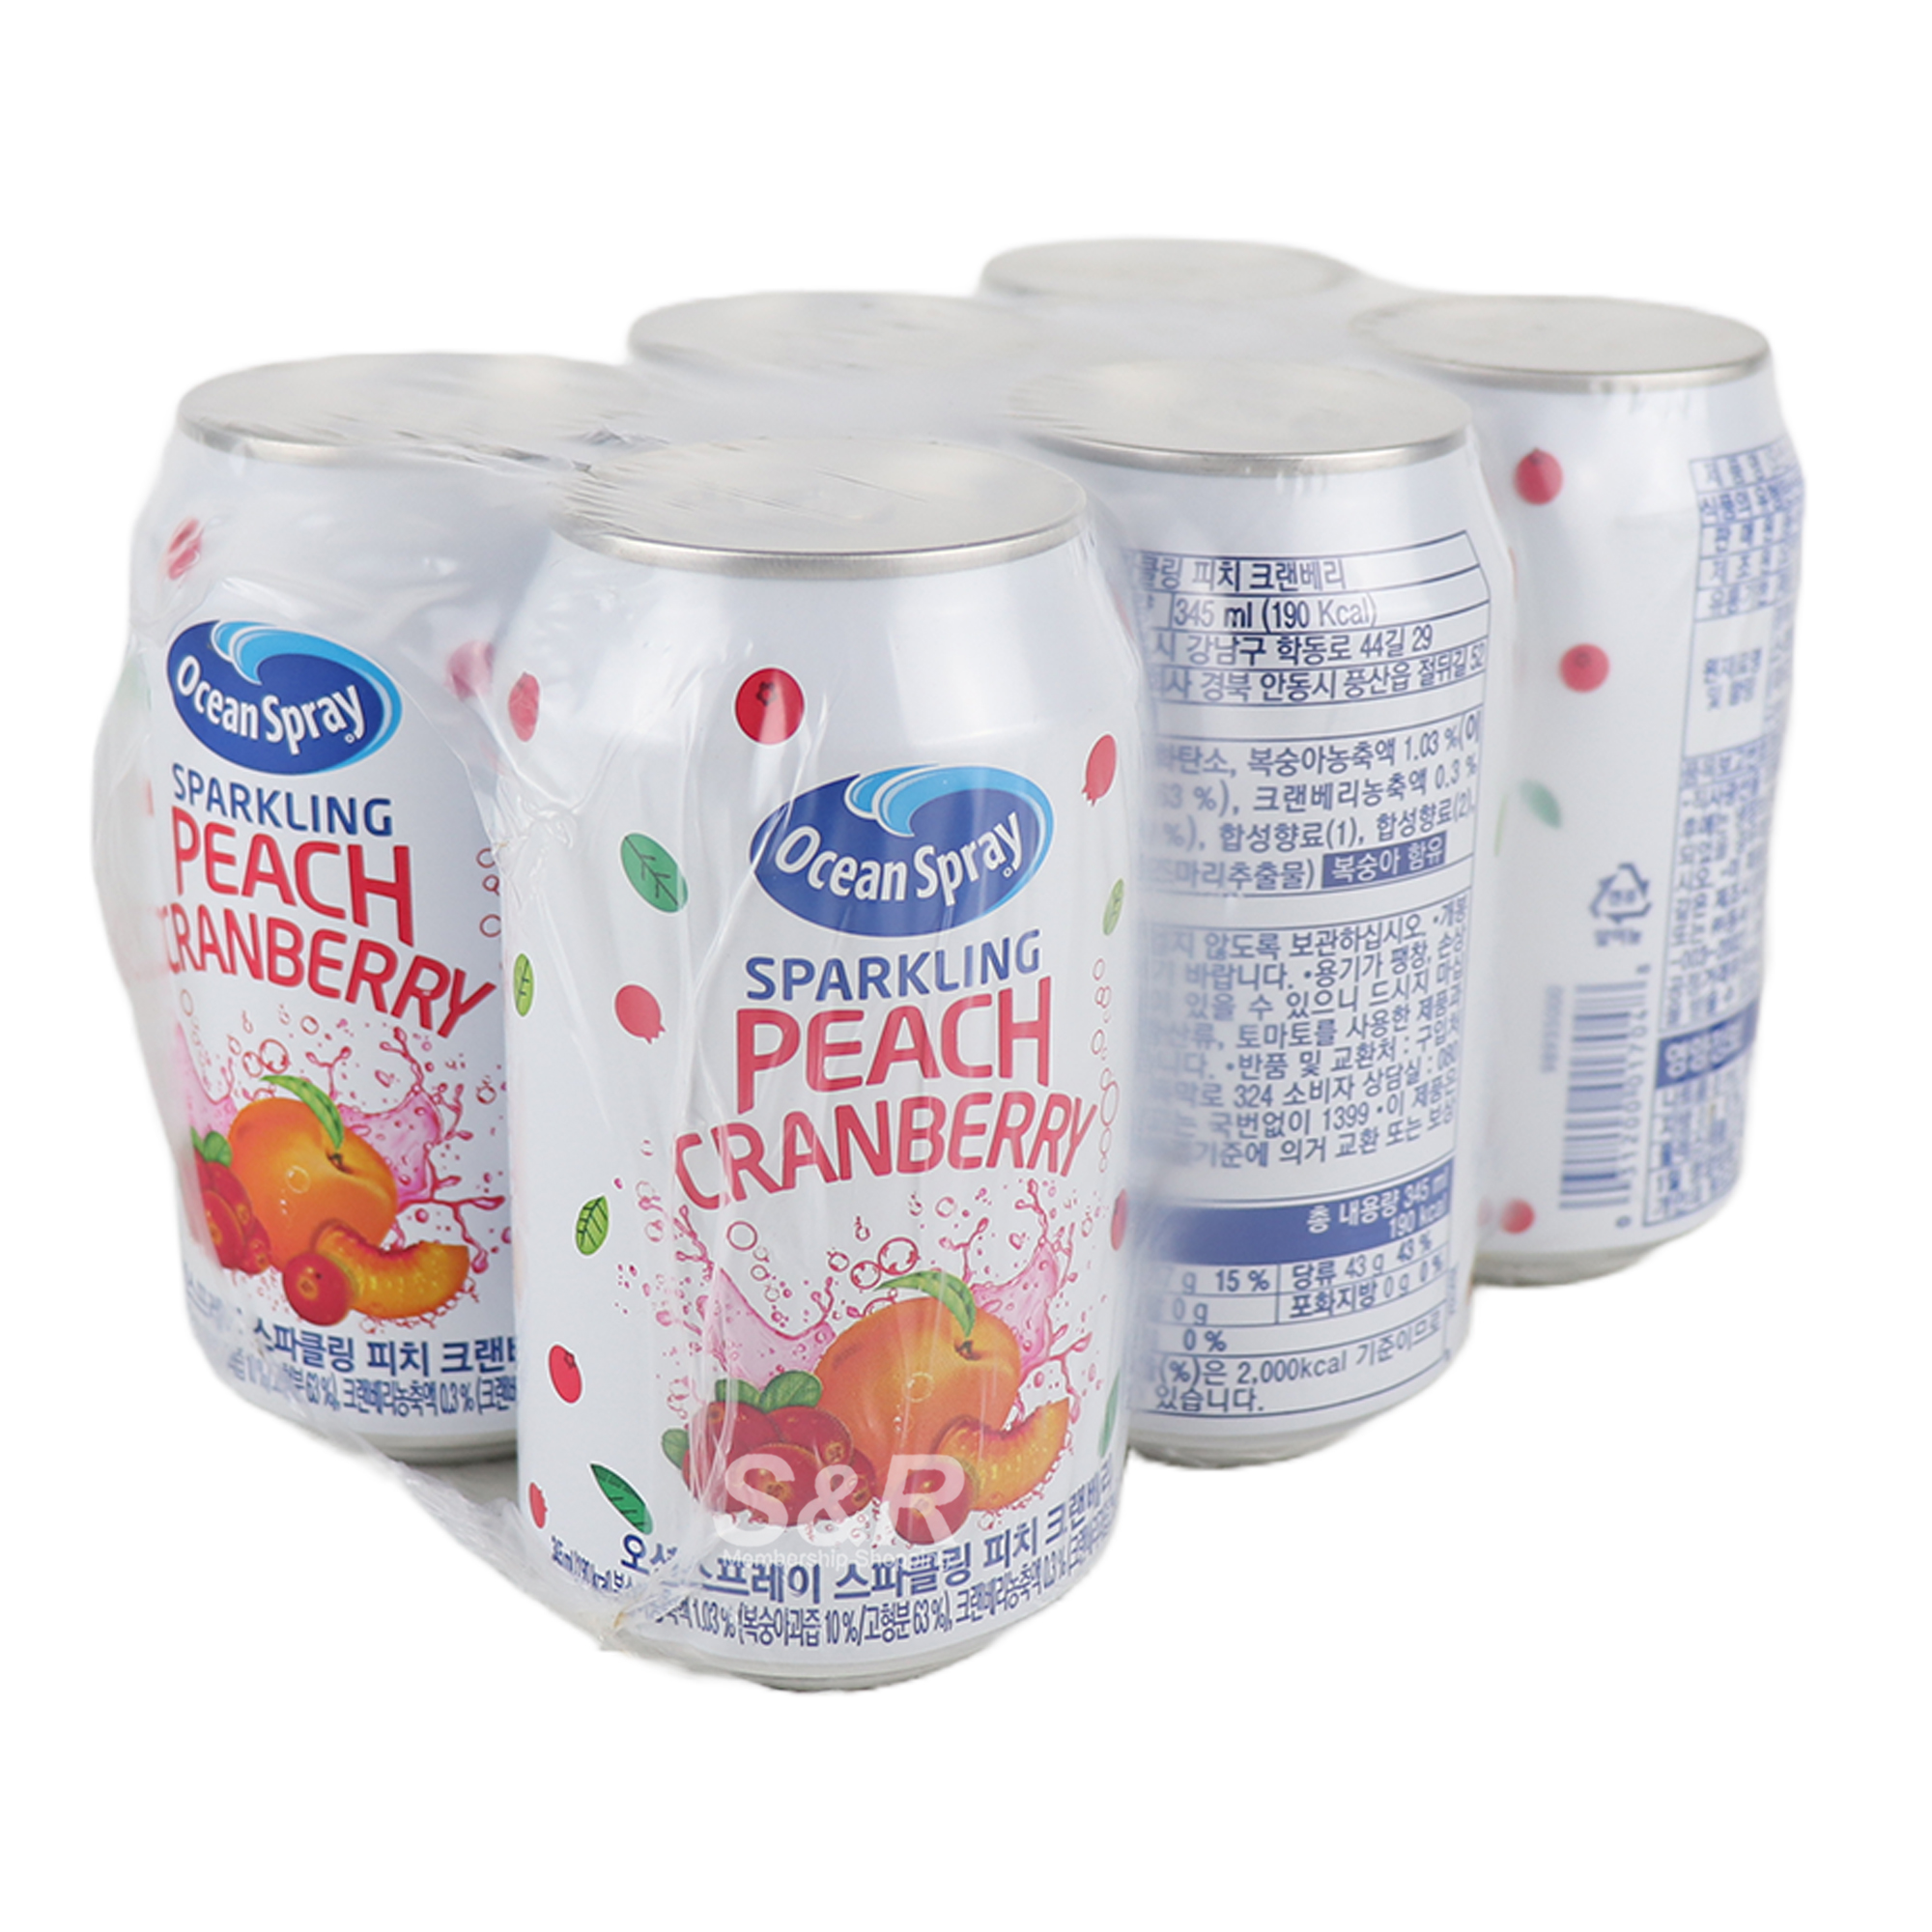 Ocean Sparkling Spray Peach Cranberry 6 cans